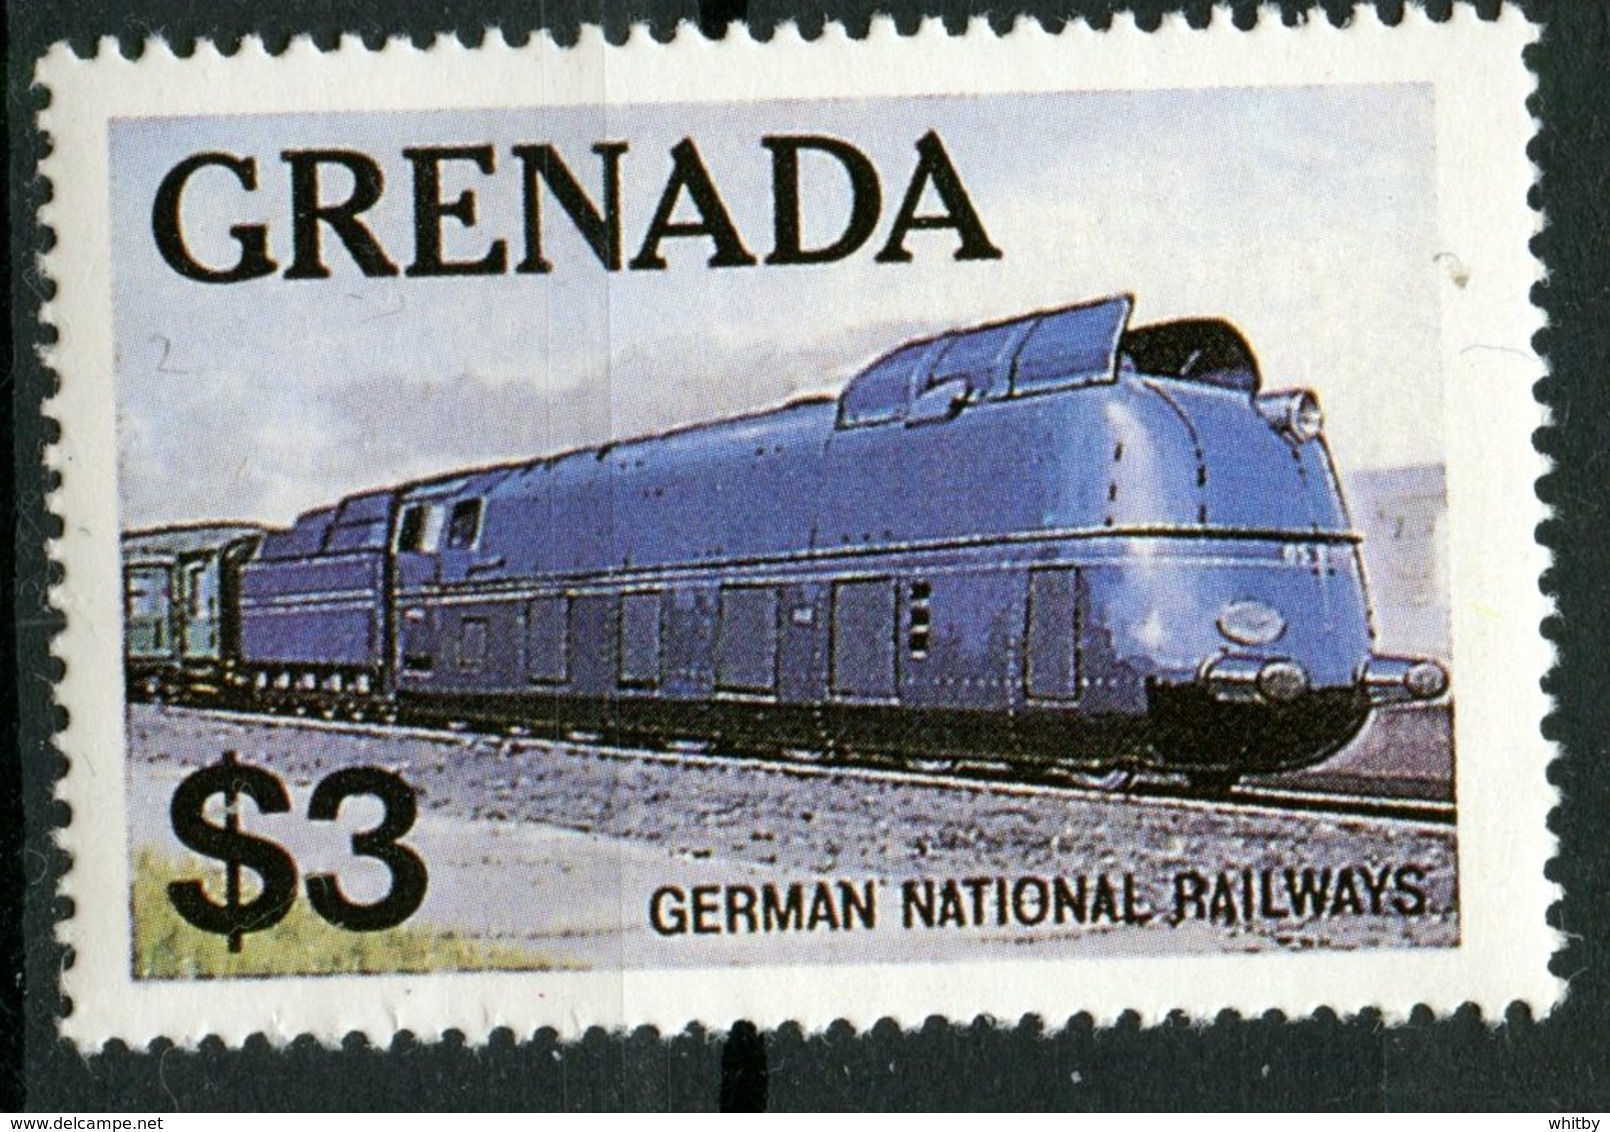 Greneda 1982 $3.00 German National Railway Issue #1125 - Grenada (1974-...)